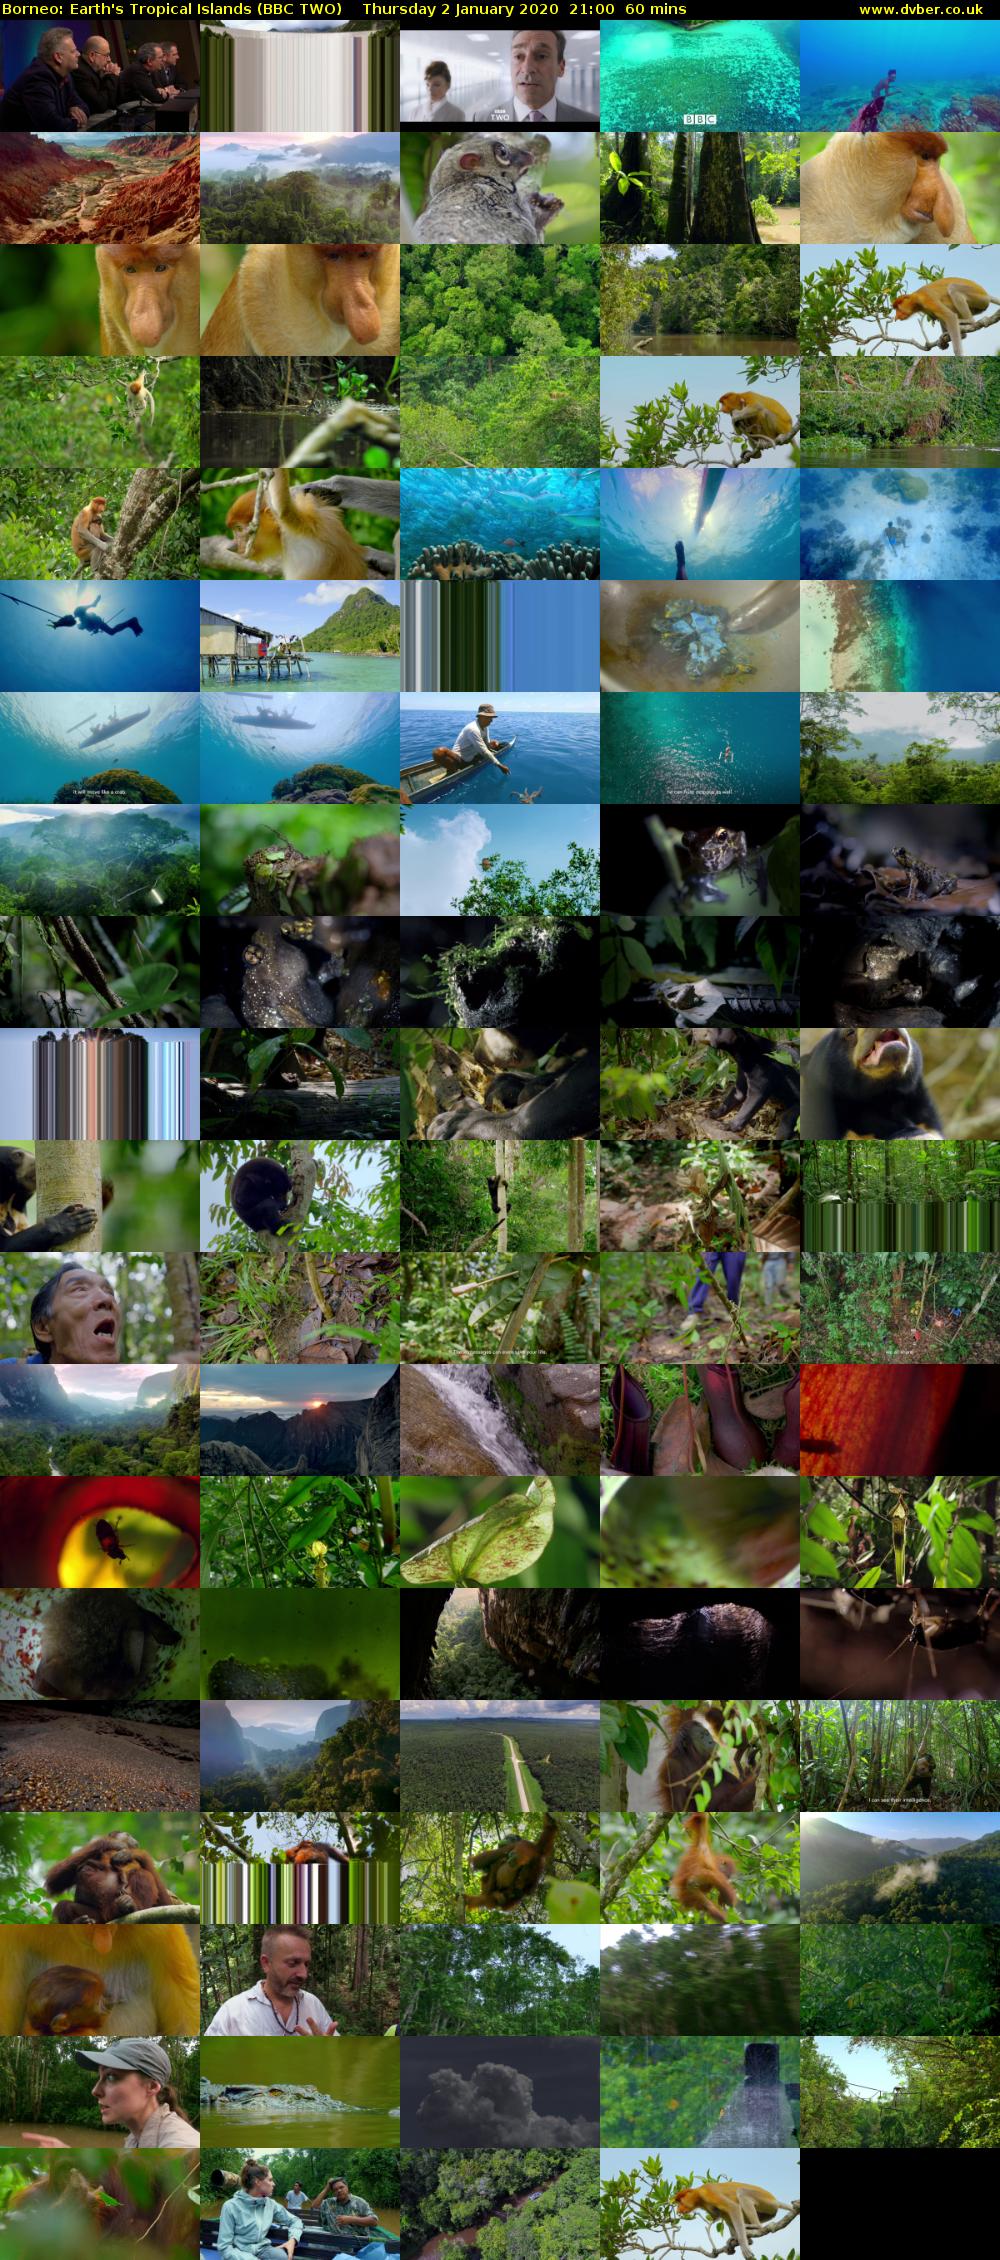 Borneo: Earth's Tropical Islands (BBC TWO) Thursday 2 January 2020 21:00 - 22:00